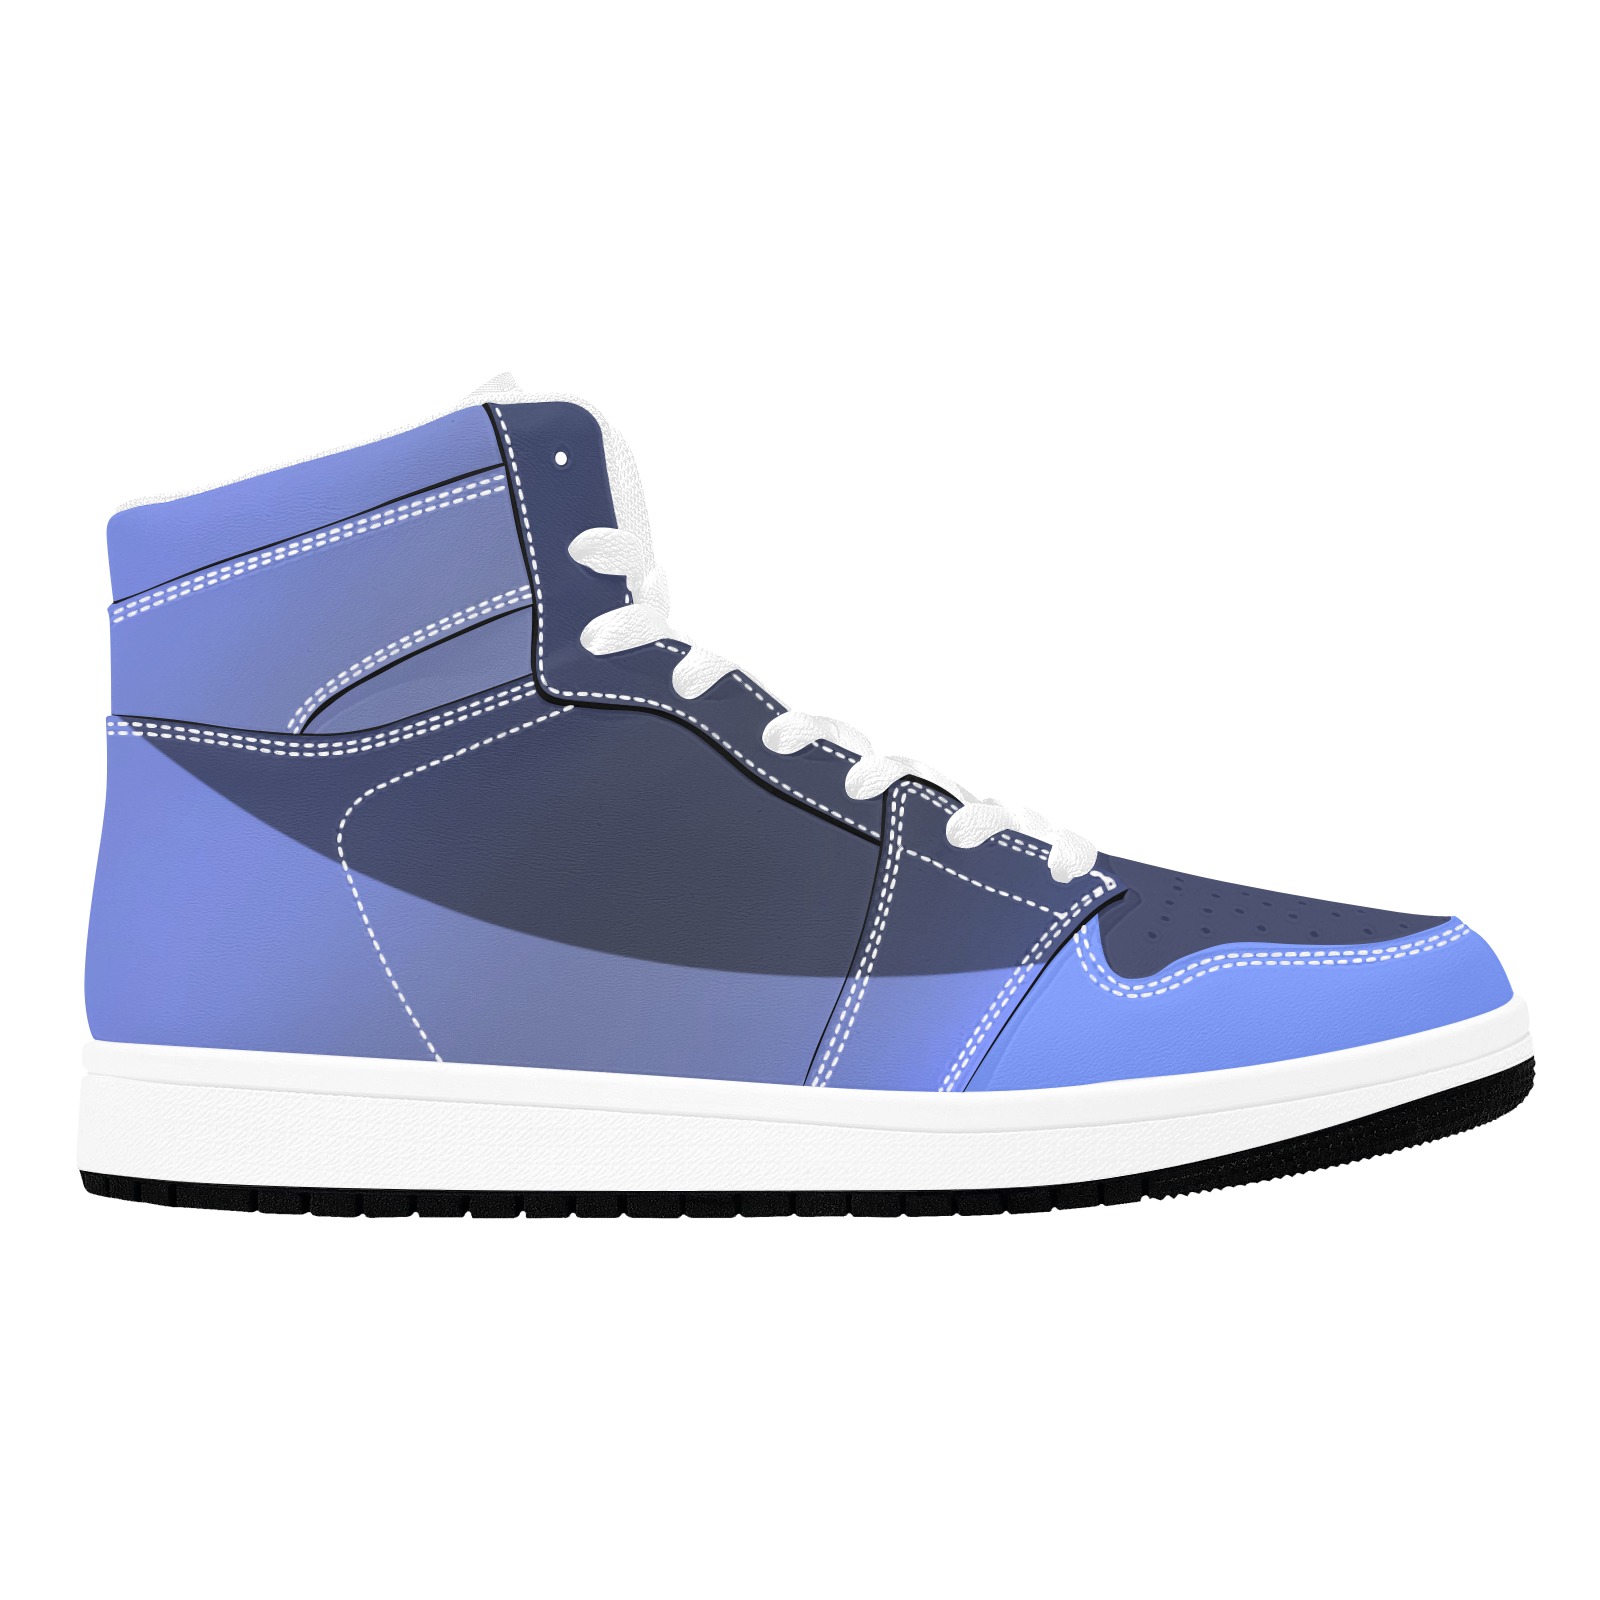 Three Tone Blue Unisex High Top Sneakers (Model 20042)